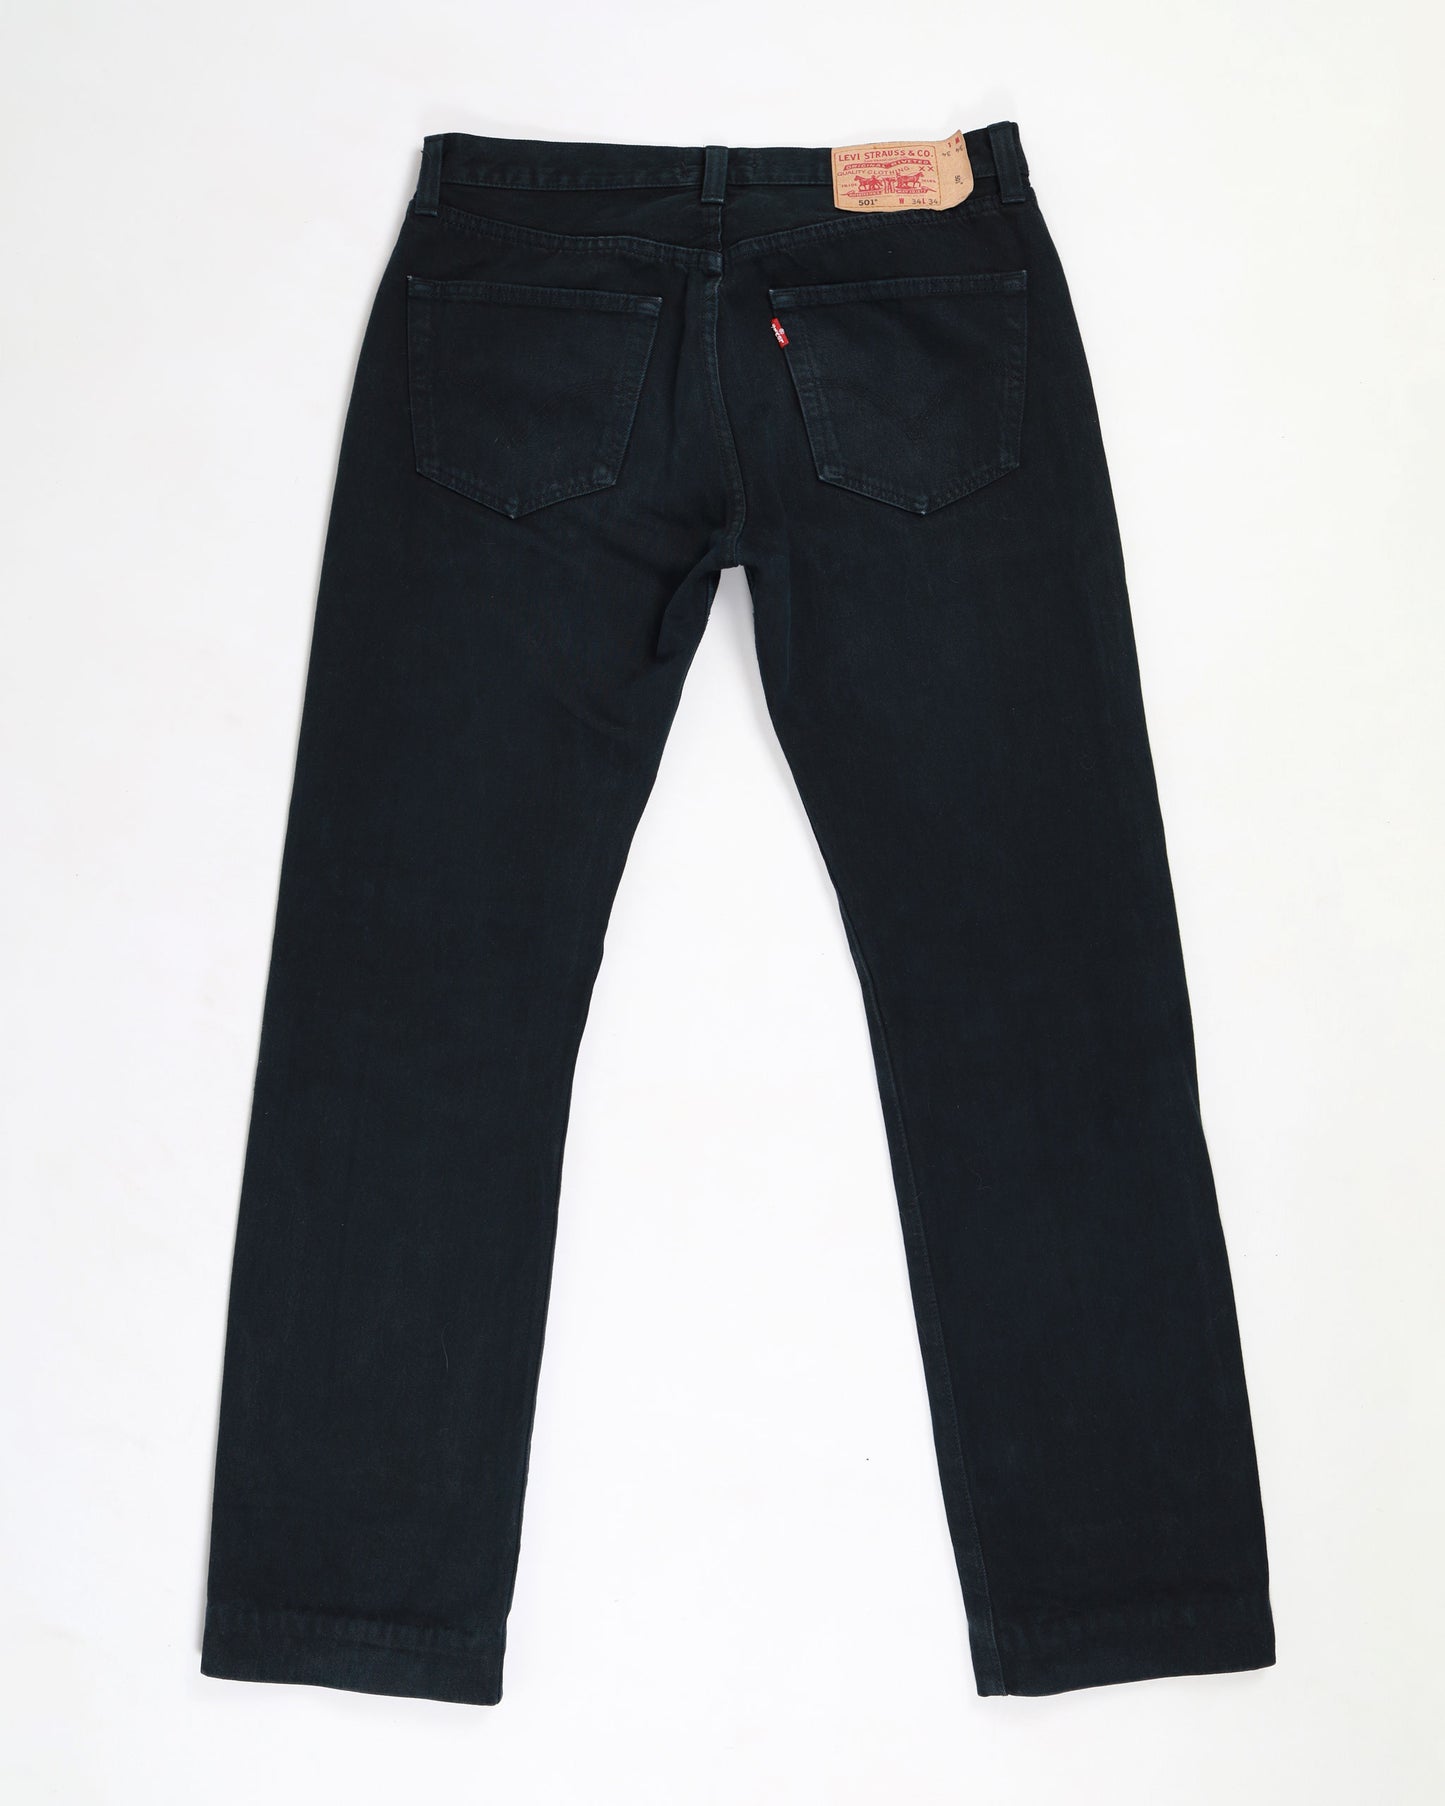 Levi’s 501 Jeans in Black W32